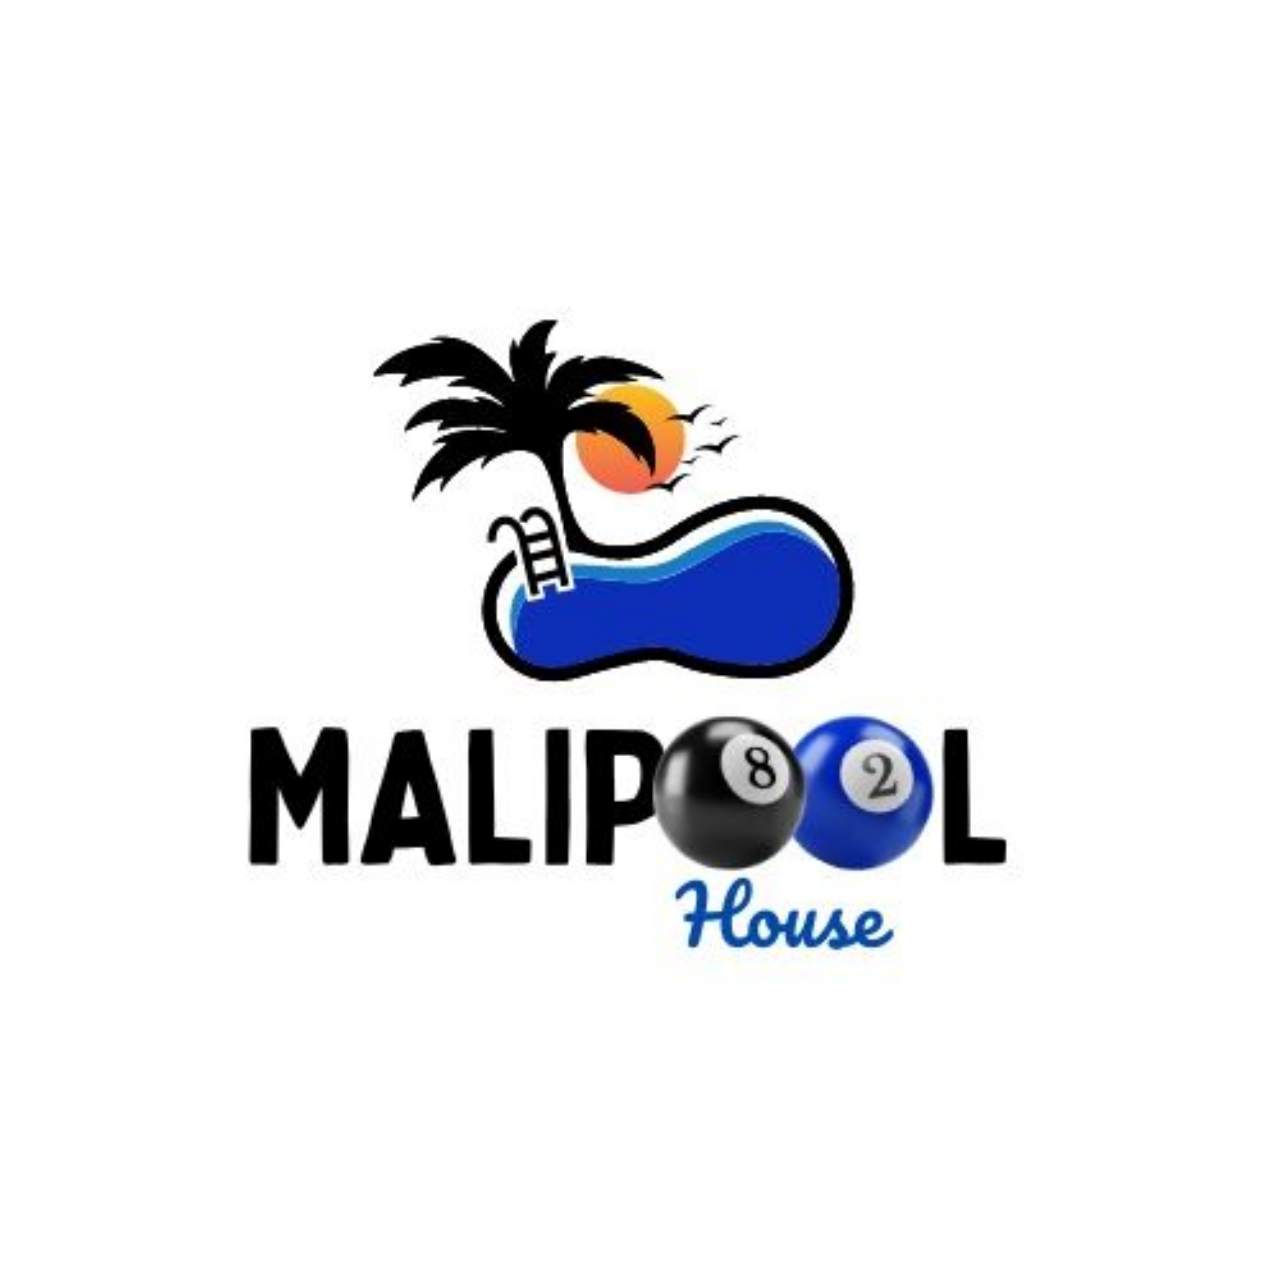 Malipool82's logo